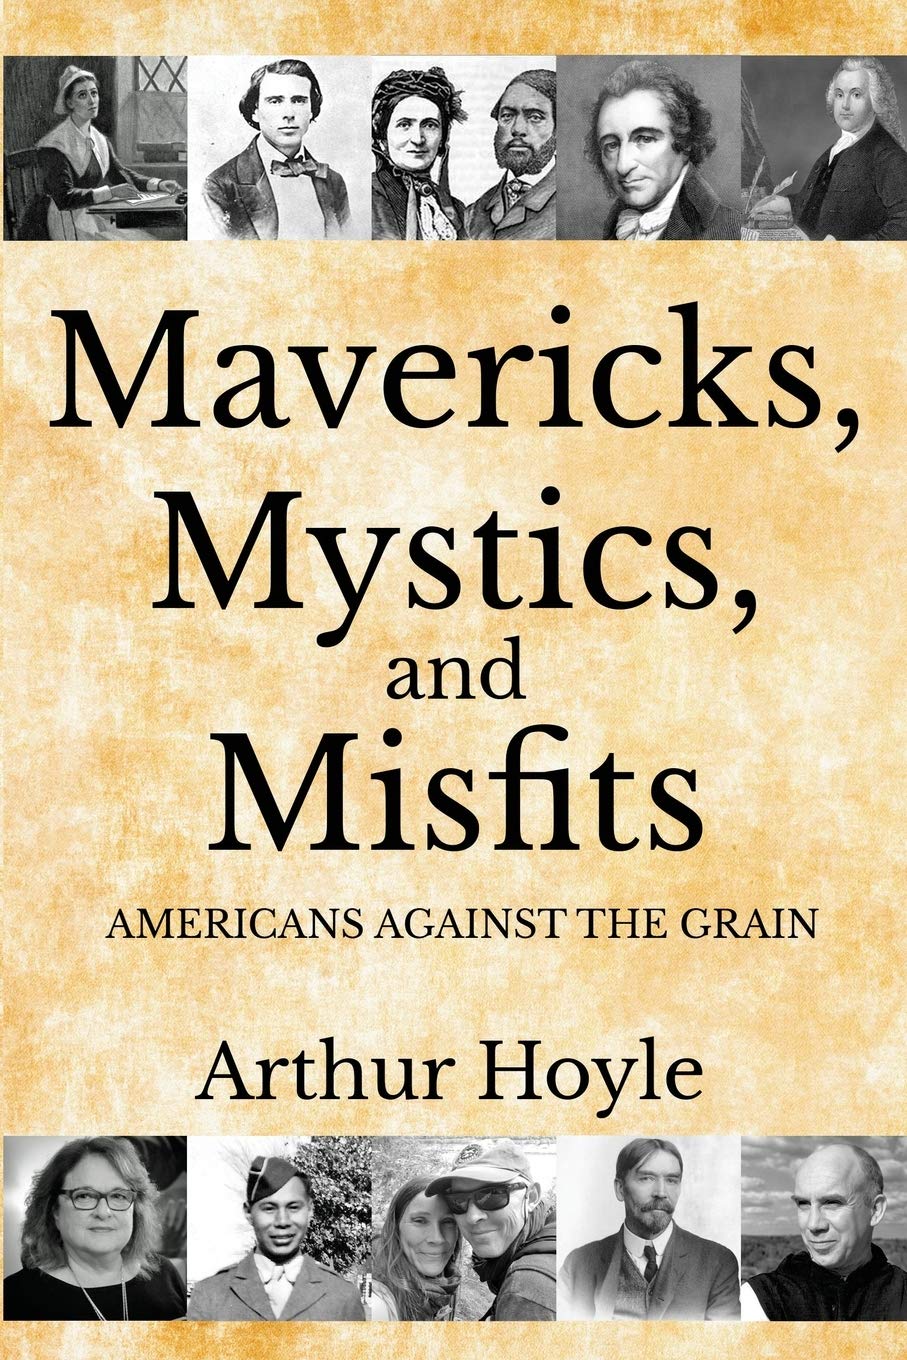 Mavericks, Mystics, and Misfits